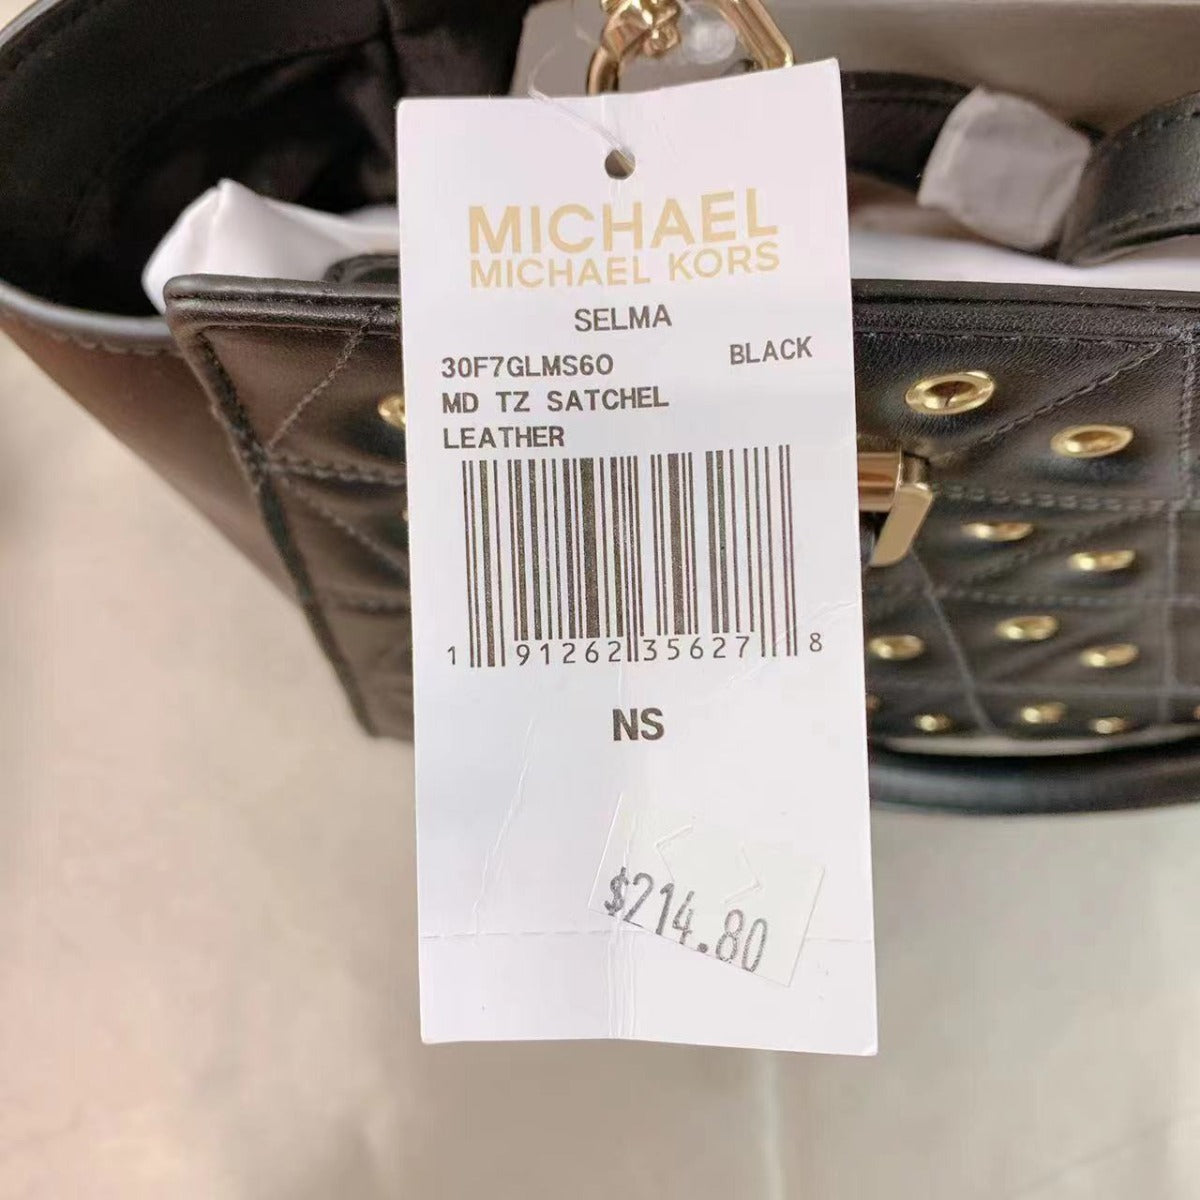 Michael Kors 30F7GLMS60 Satchel Bags In Black